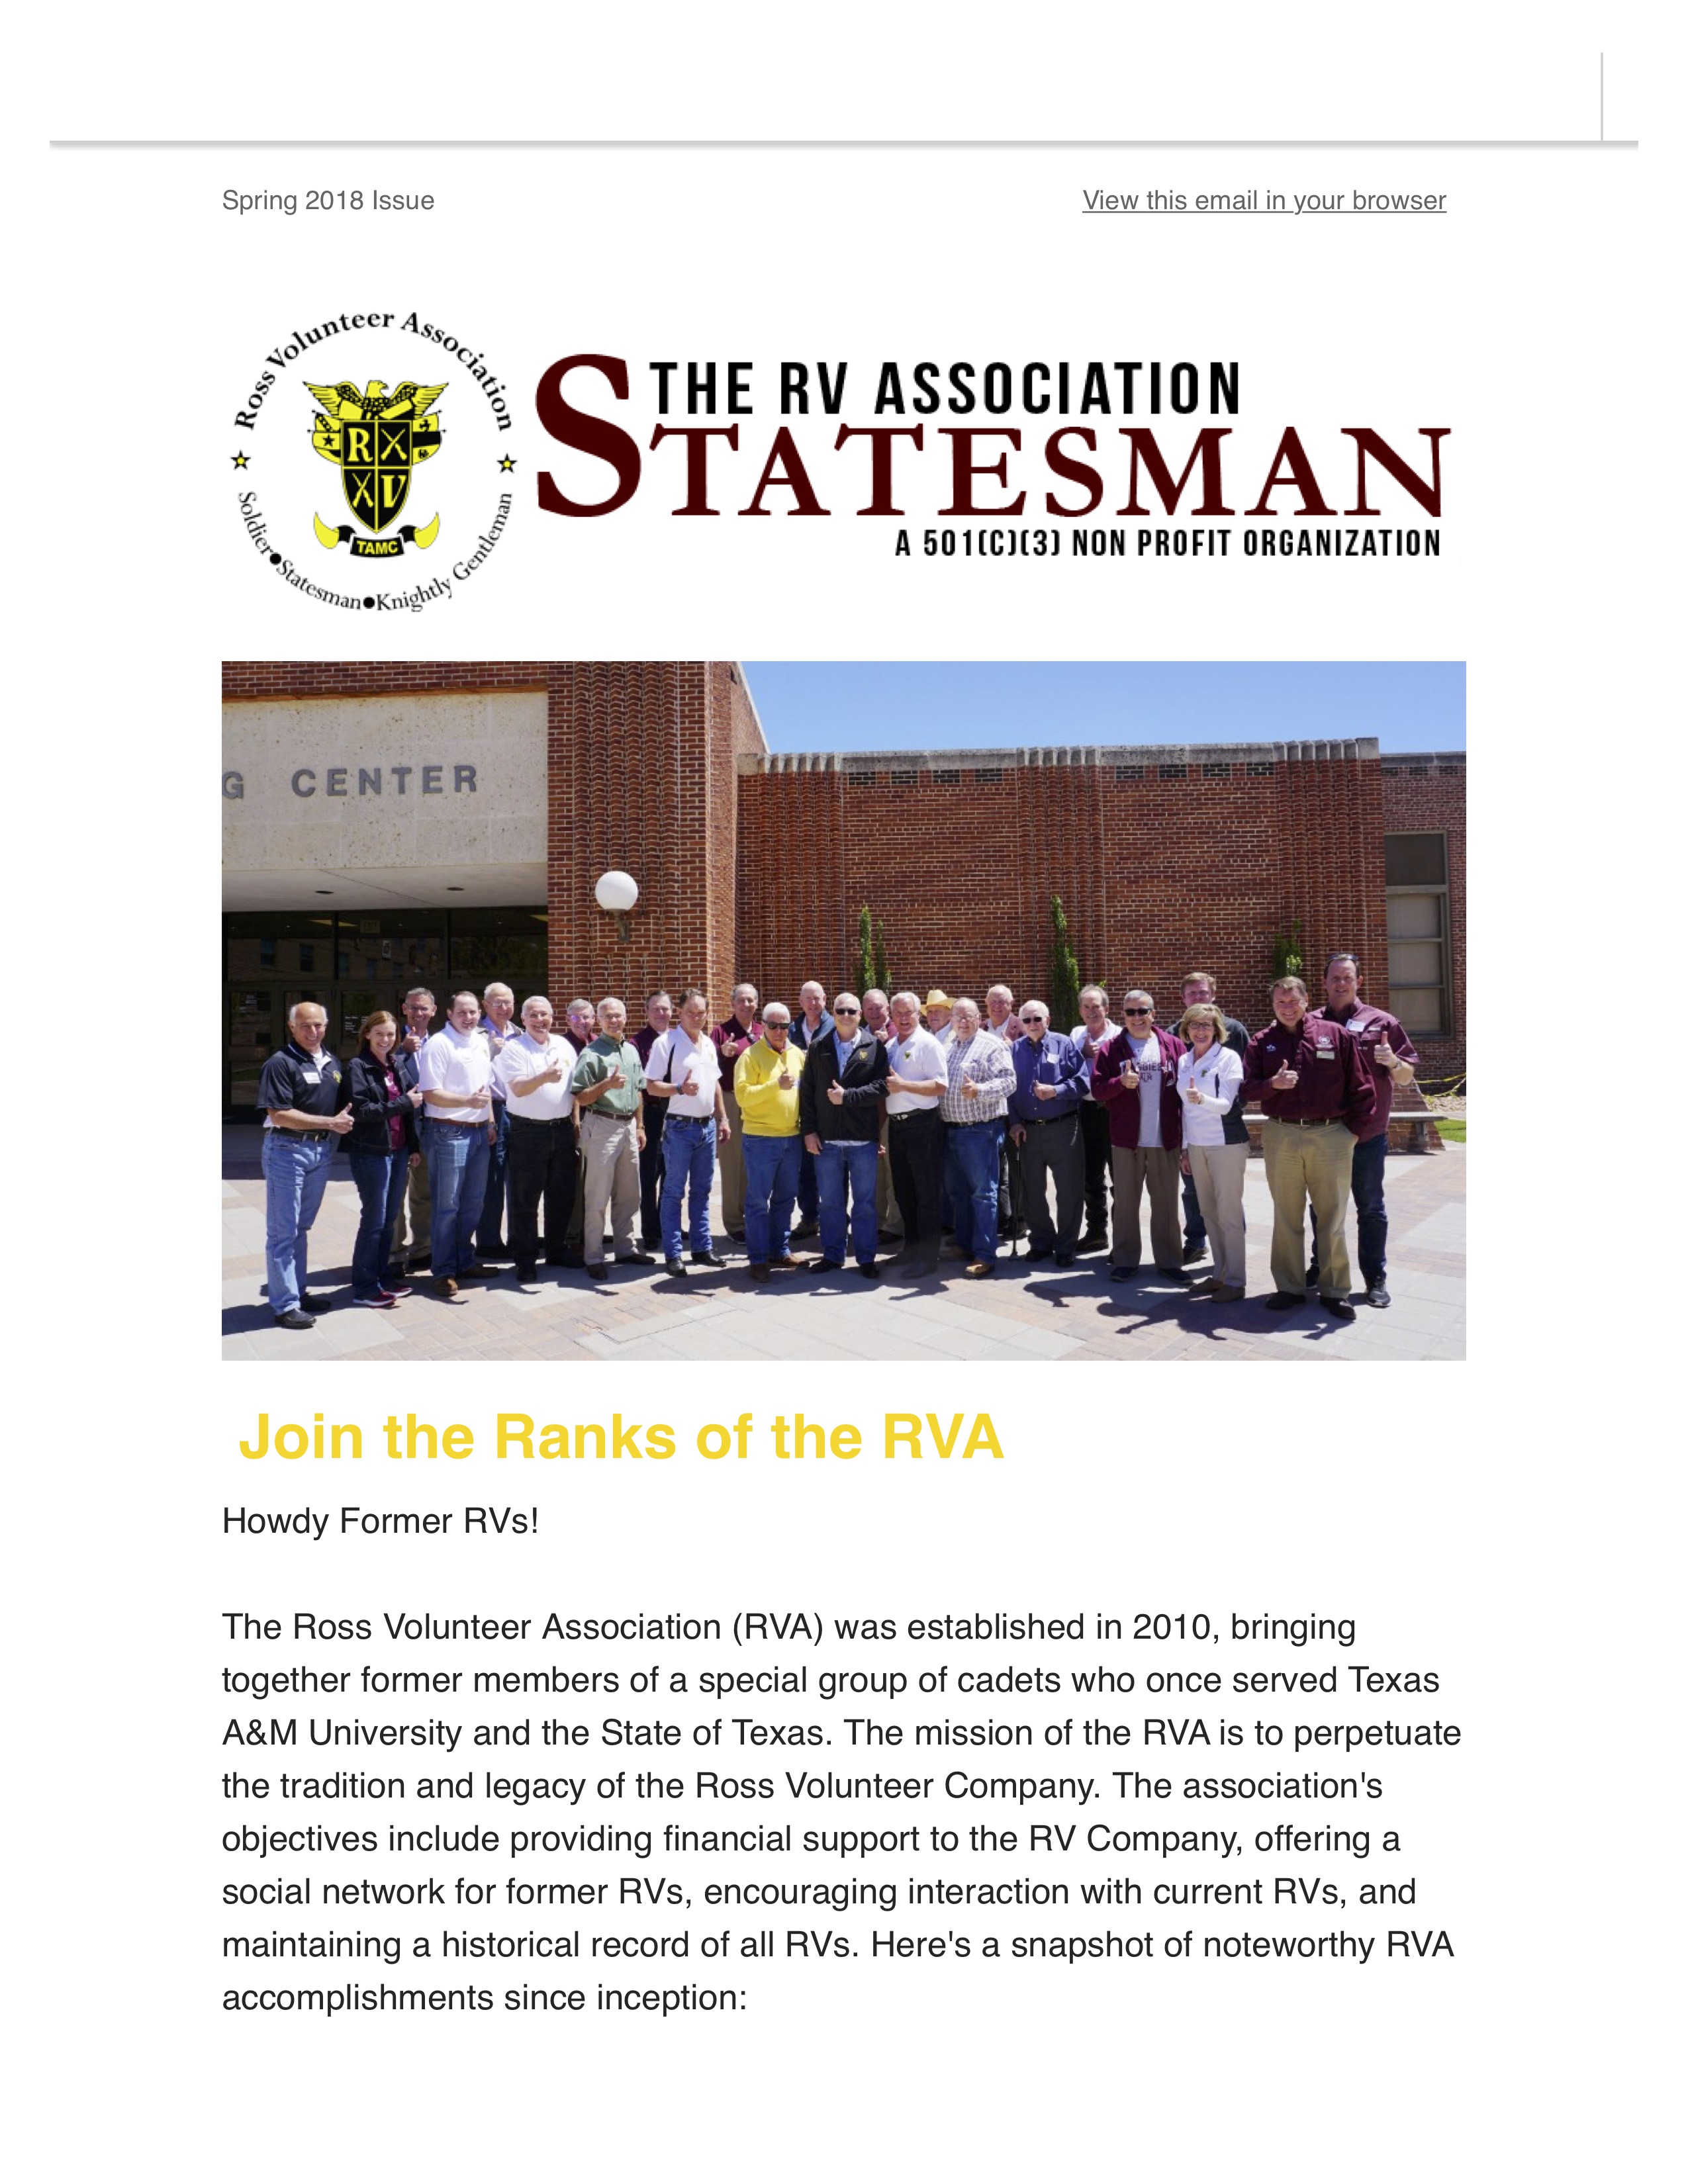 segment-001-of-rv-association-statesman-spring-2018-issue